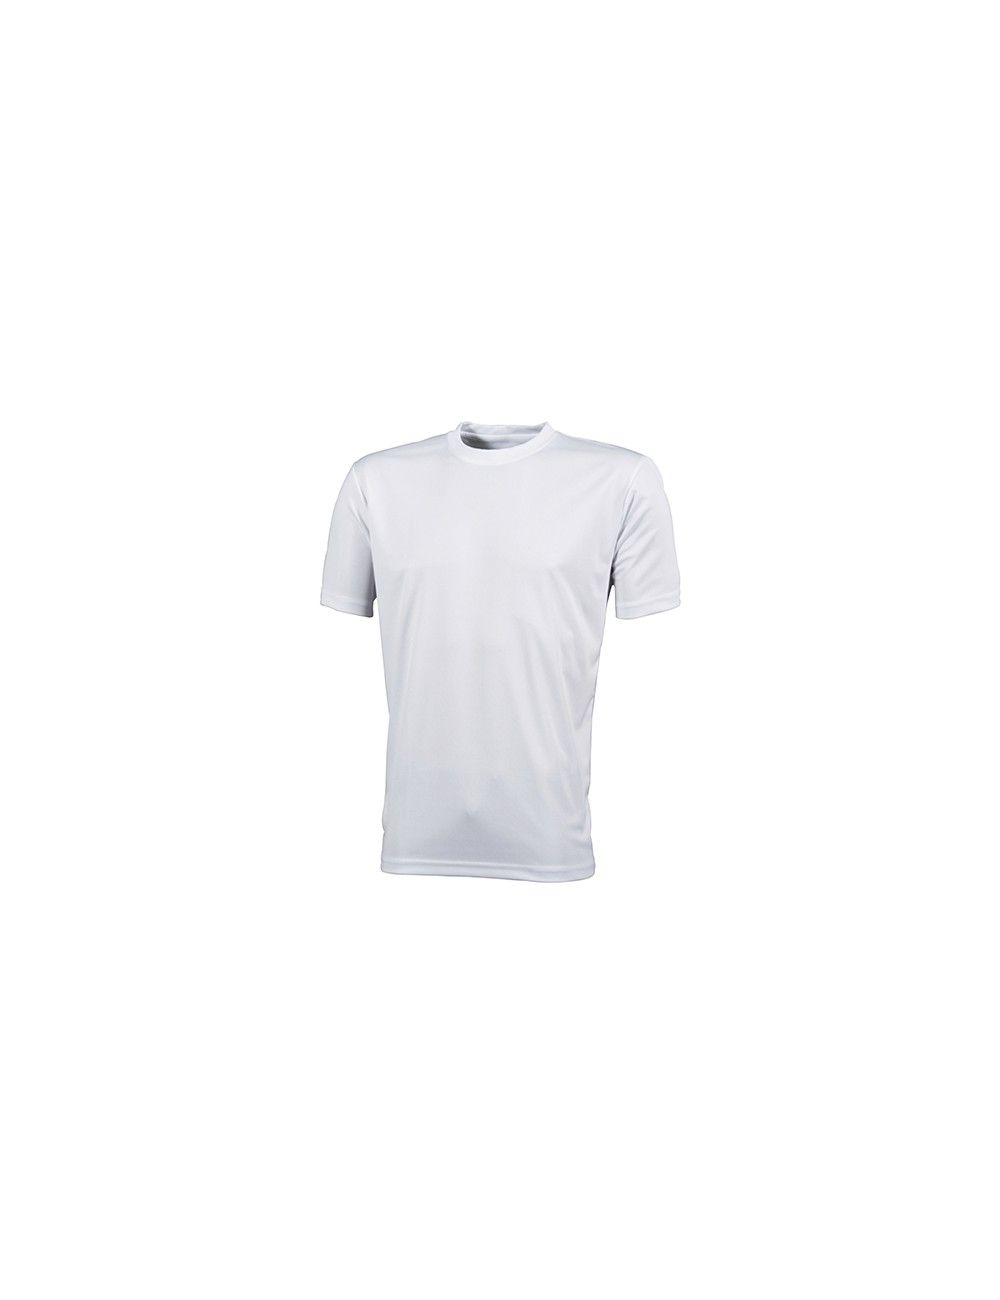 Men’s Active T-Shirt, Round Neck, Farbe White - 1